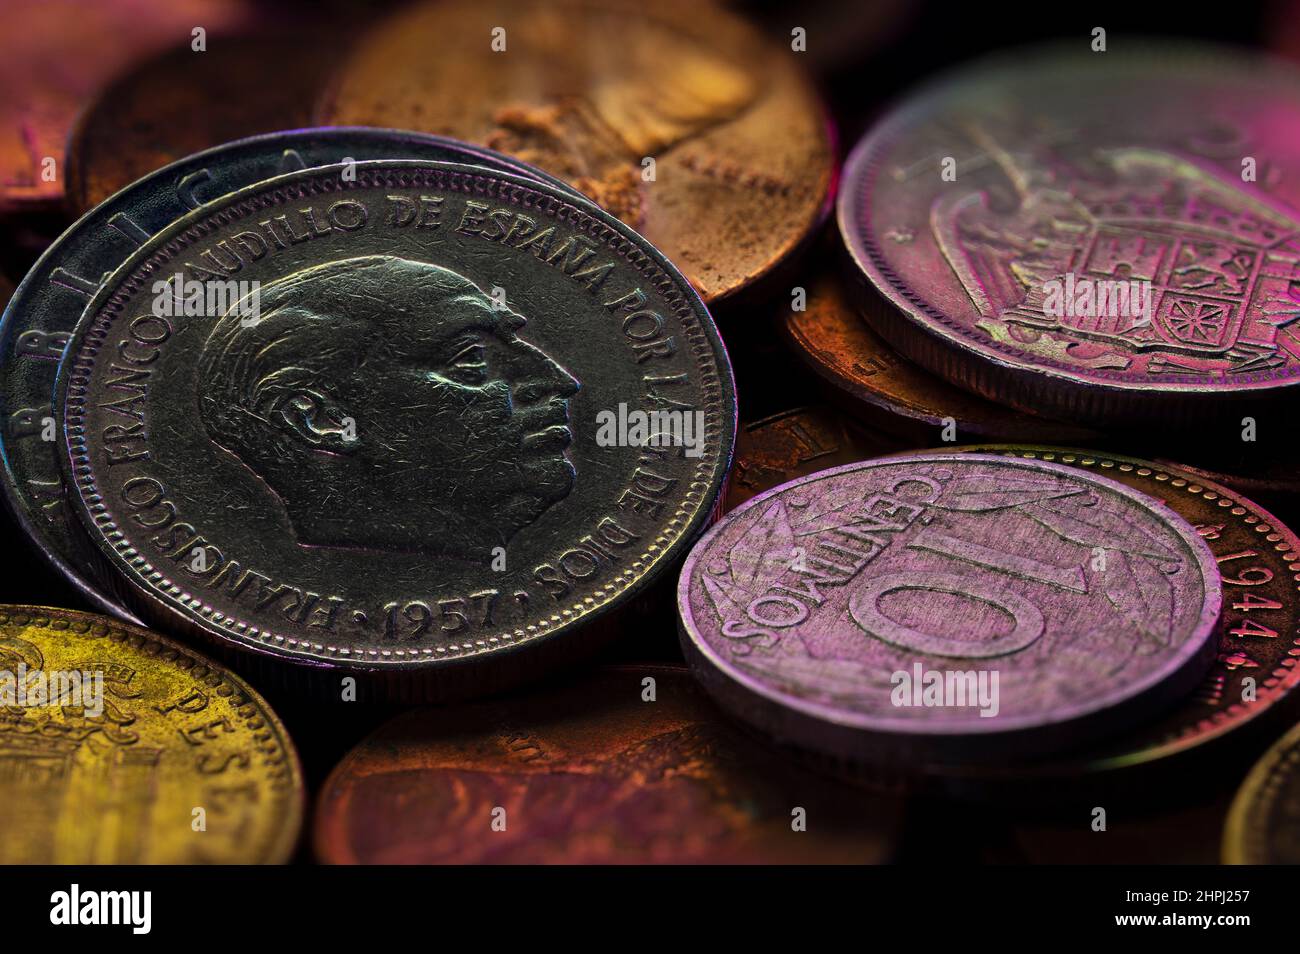 Francisco Franco Five Pesetas Coin 1957 Obverse Reverse Close Up Coin Stacks Black Background Stock Photo